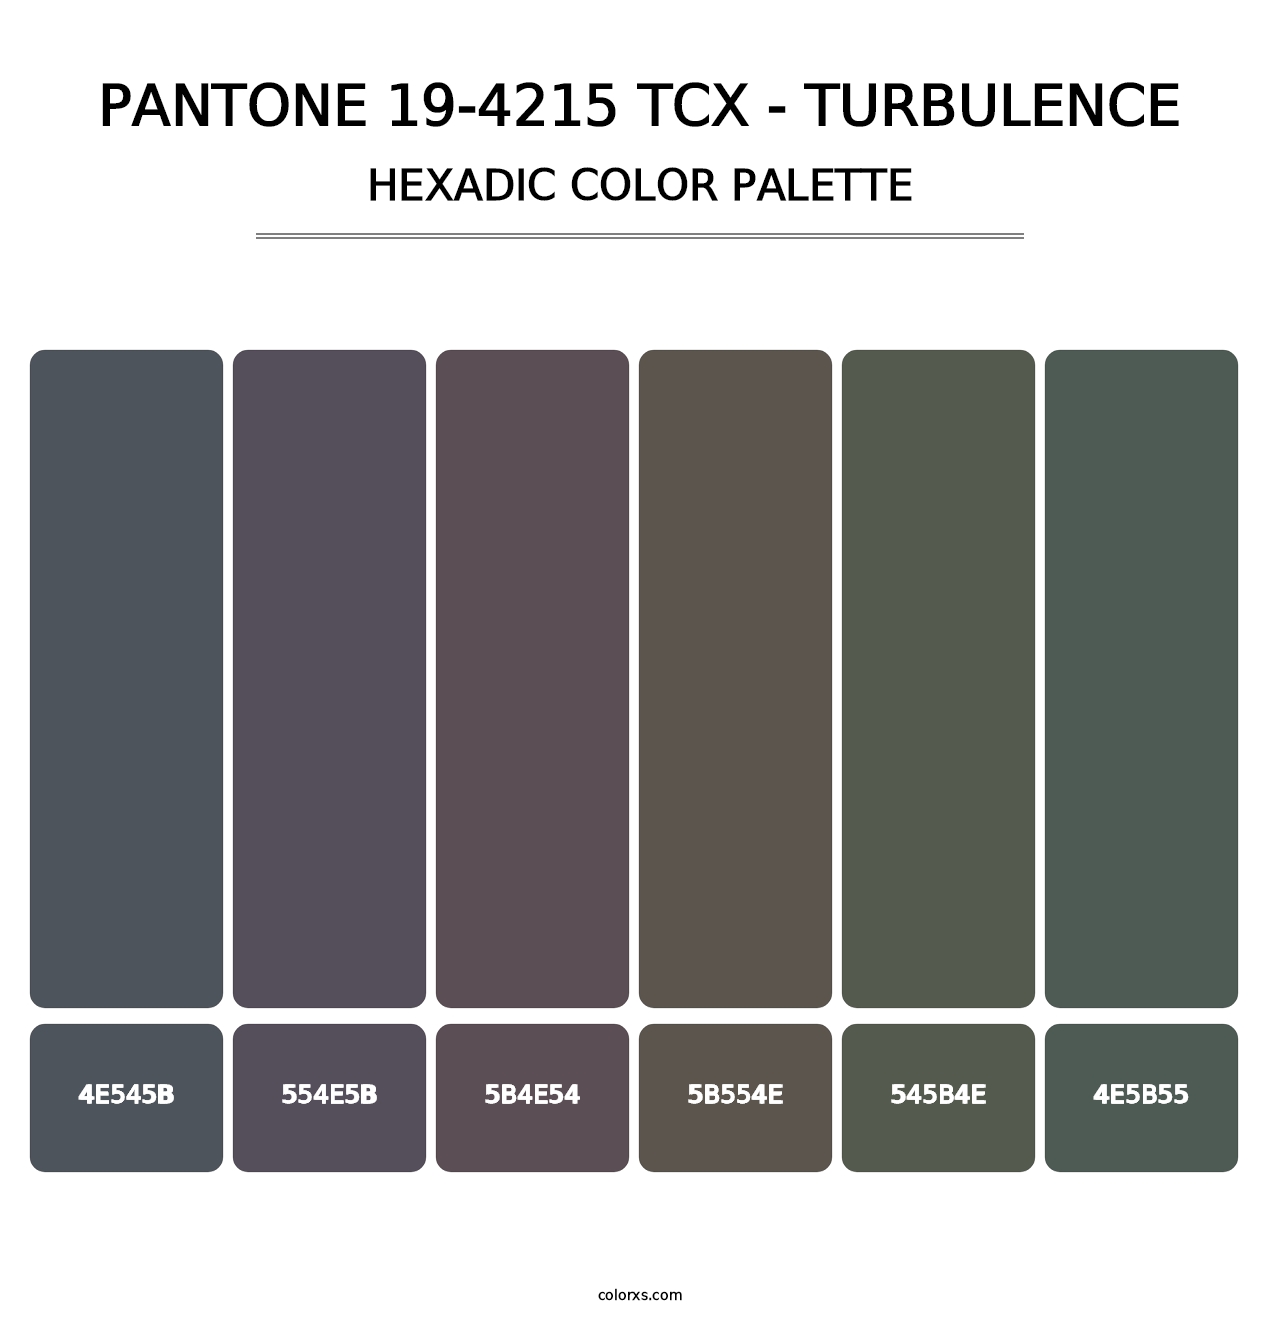 PANTONE 19-4215 TCX - Turbulence - Hexadic Color Palette